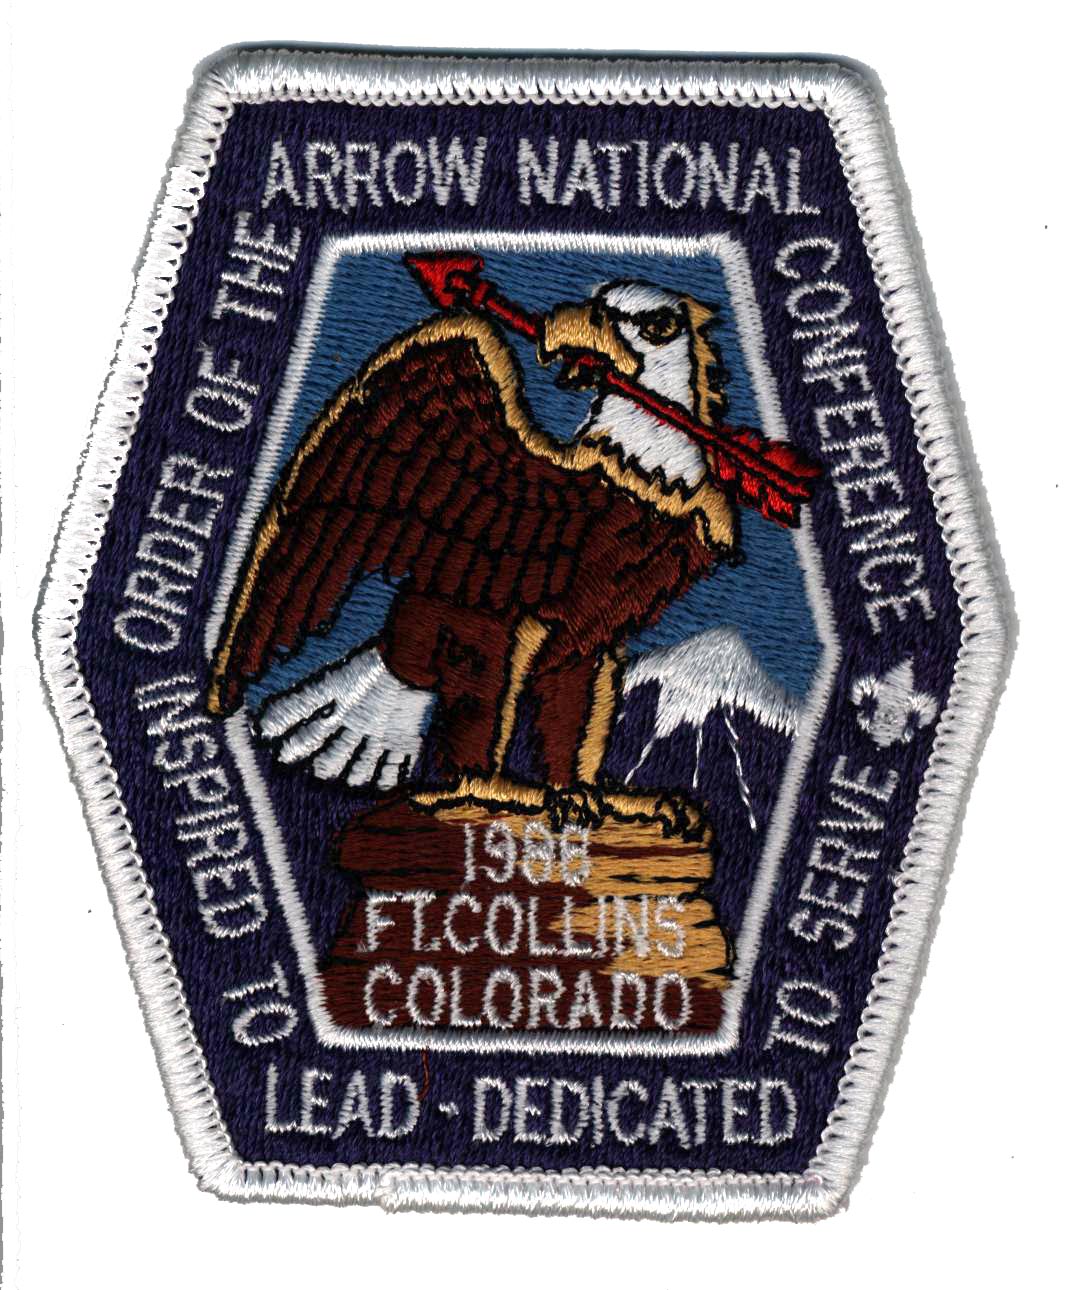 1988 NOAC patch